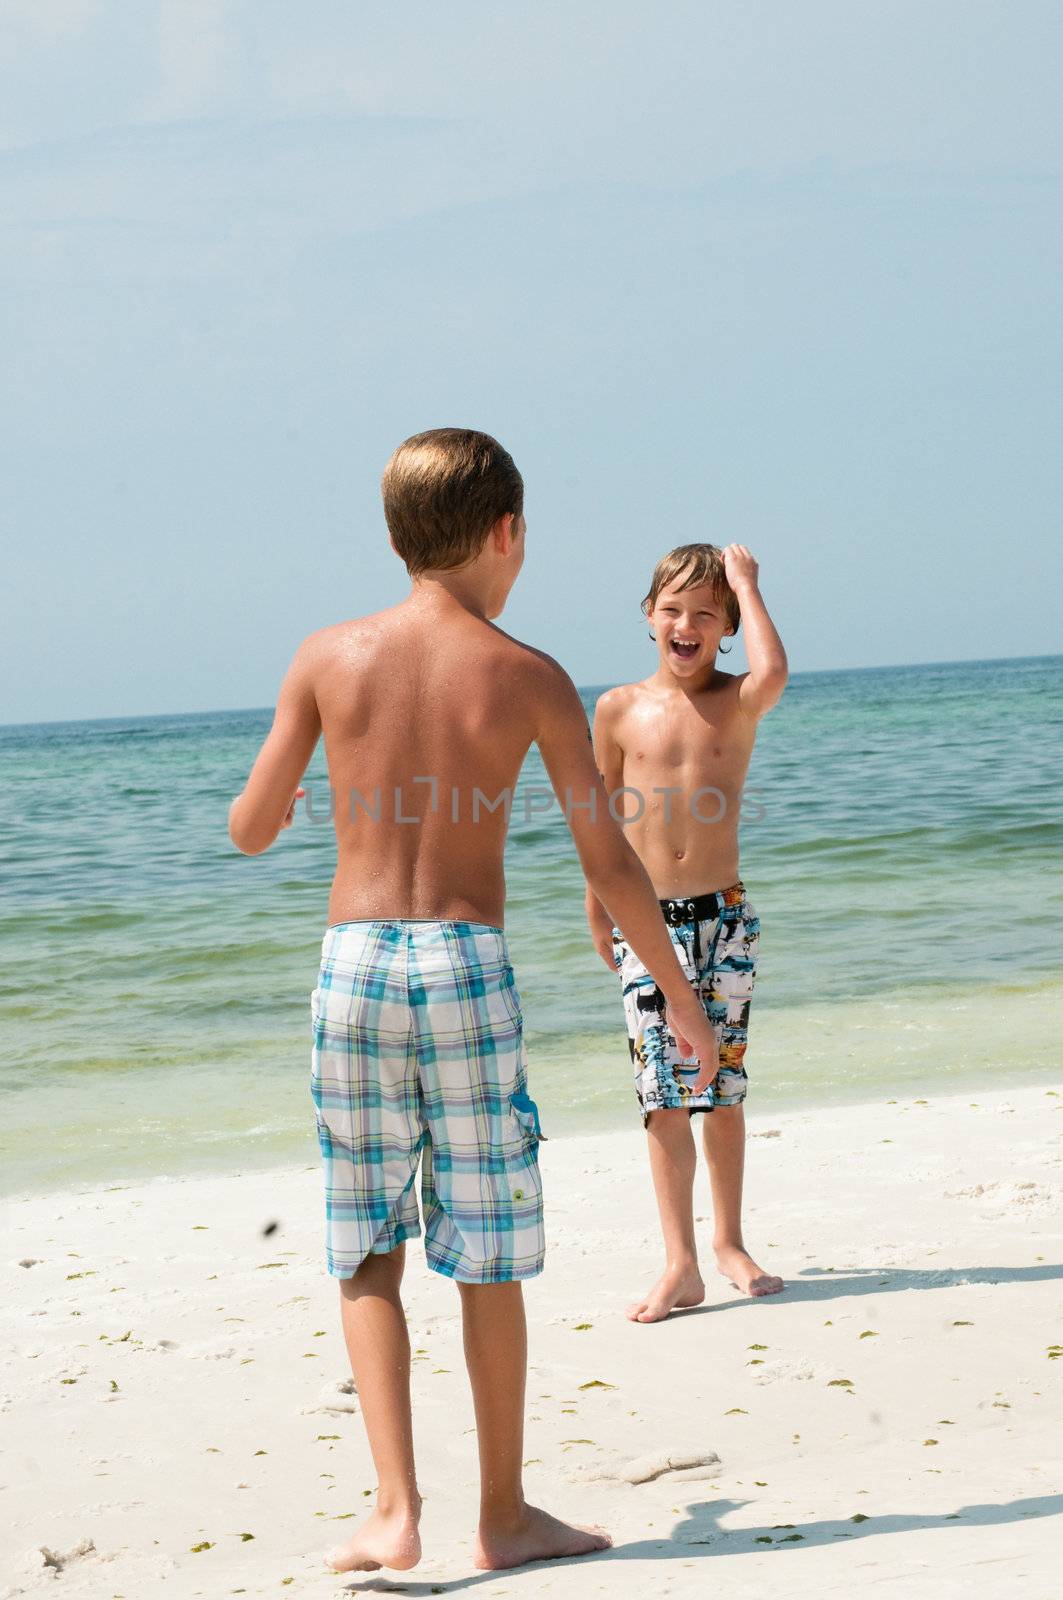 Two boys having fun on the beach.